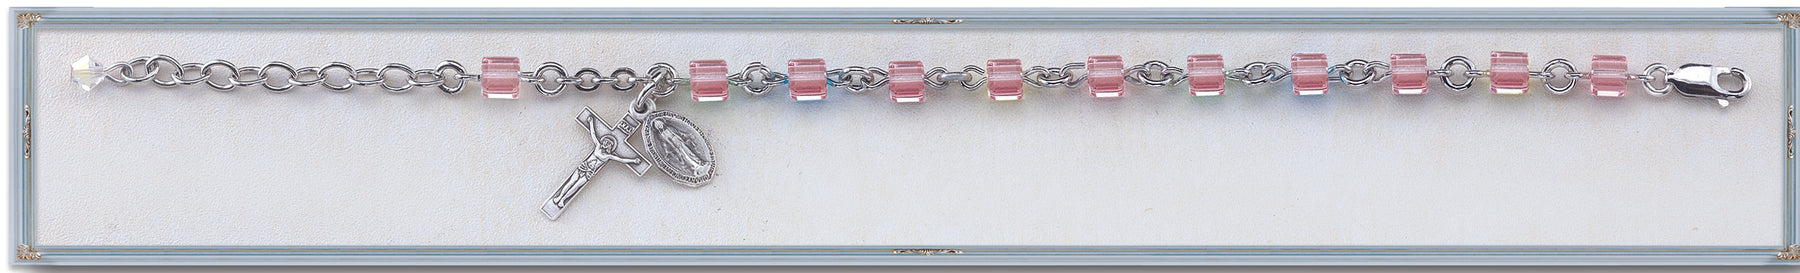 Light Rose Swarovski Crystal Cube Rosary Bracelet